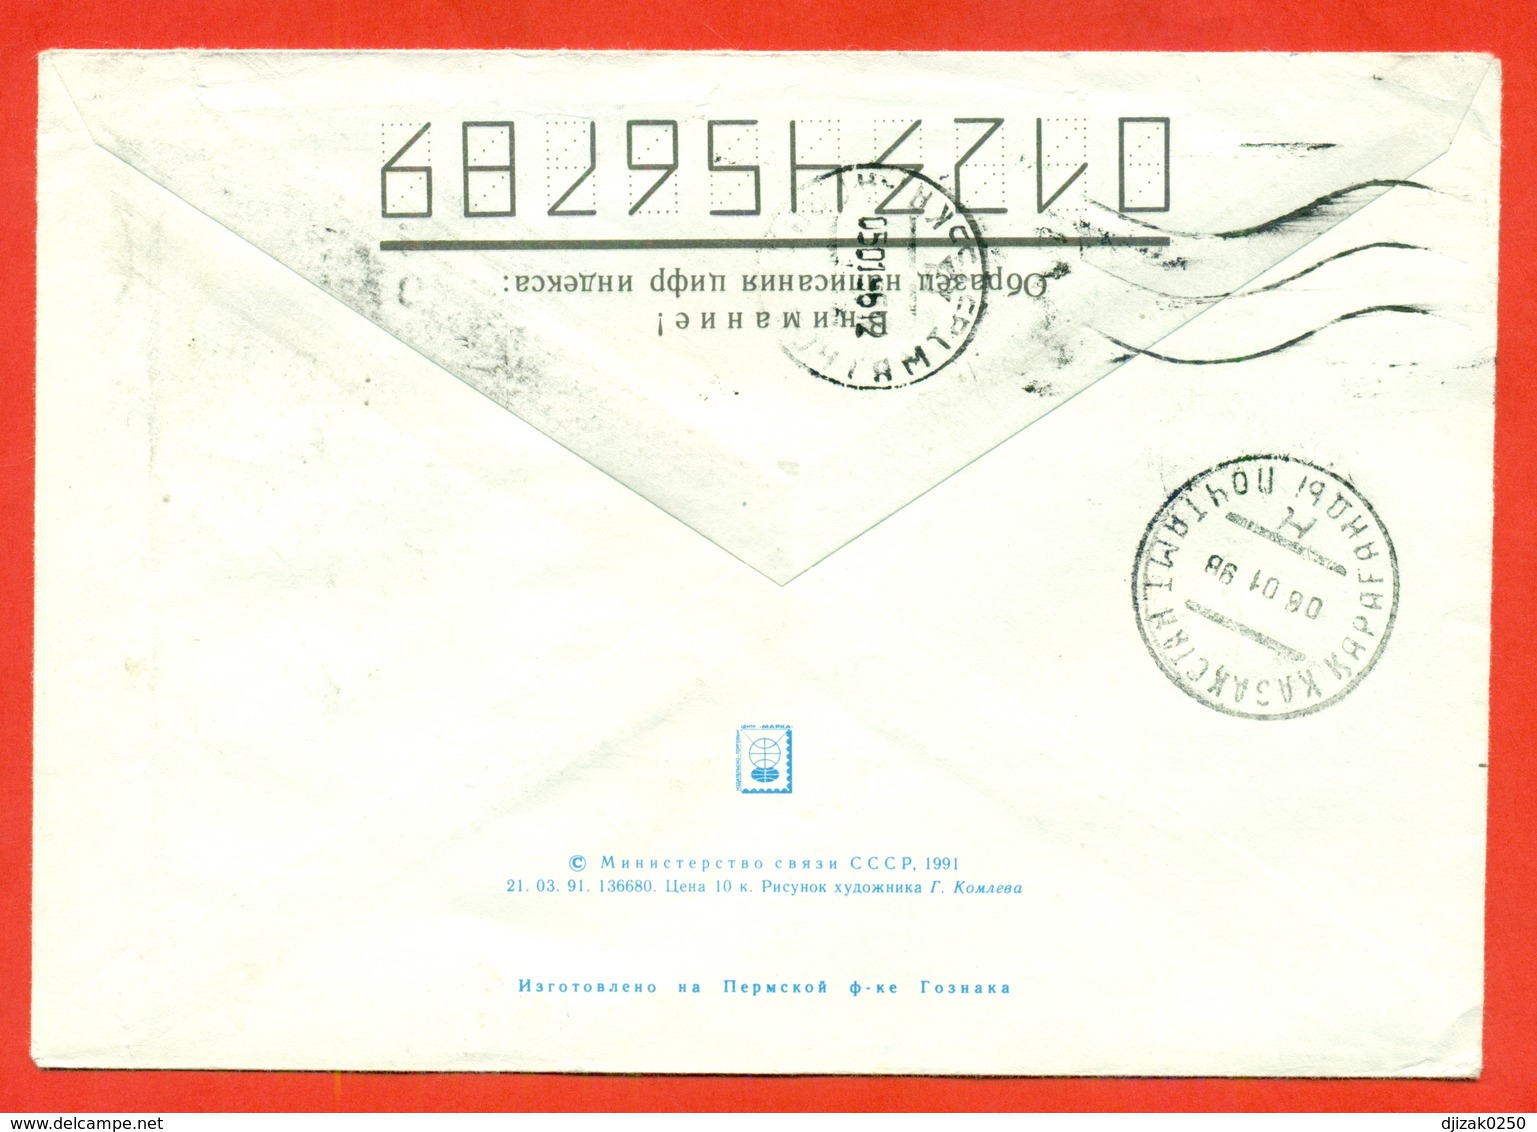 Kazakhstan 1998.Space.The Envelope Is Really Past Mail. - Kazakhstan